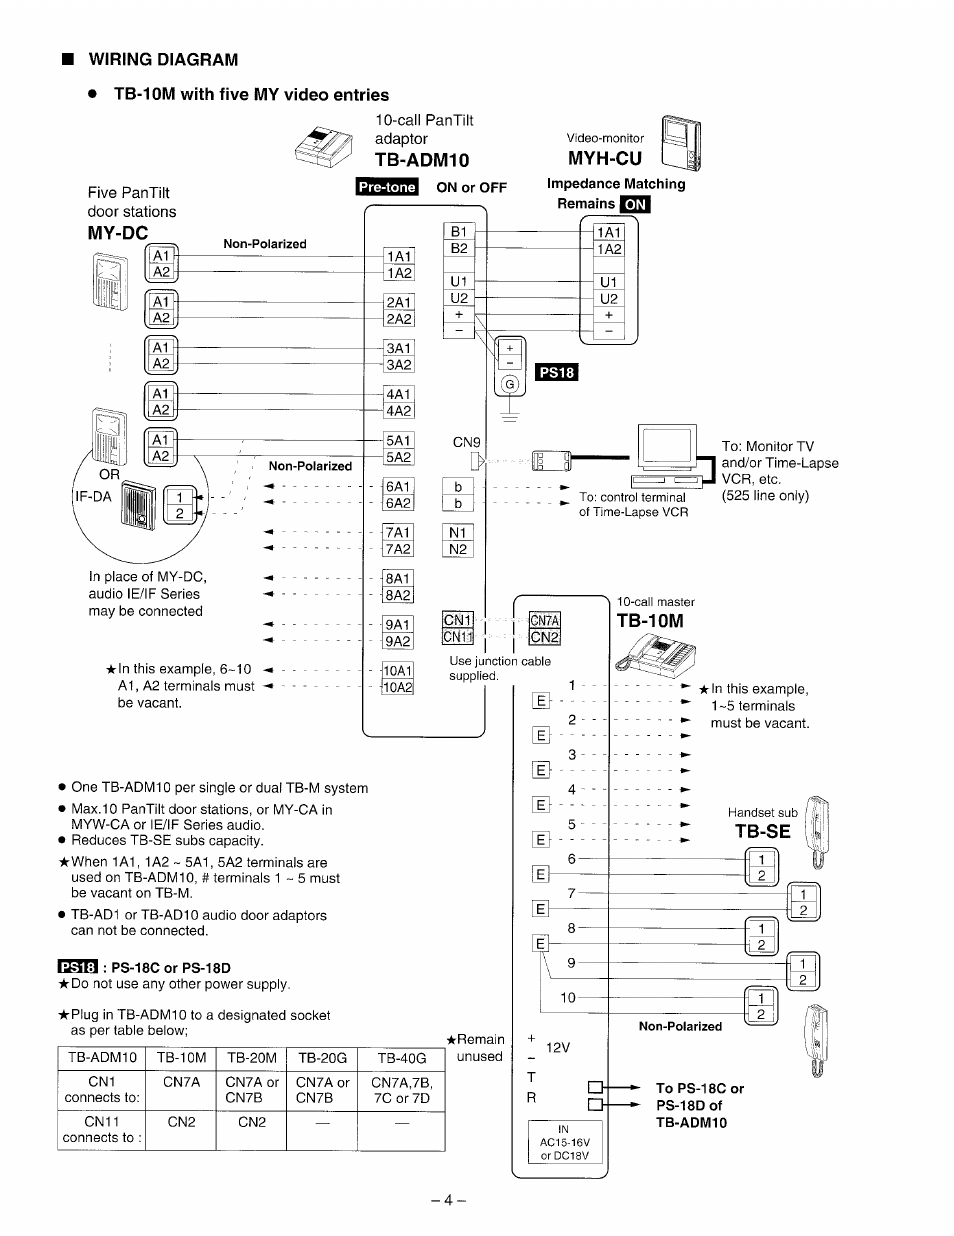 Aiphone Wiring Diagram from www.manualsdir.com